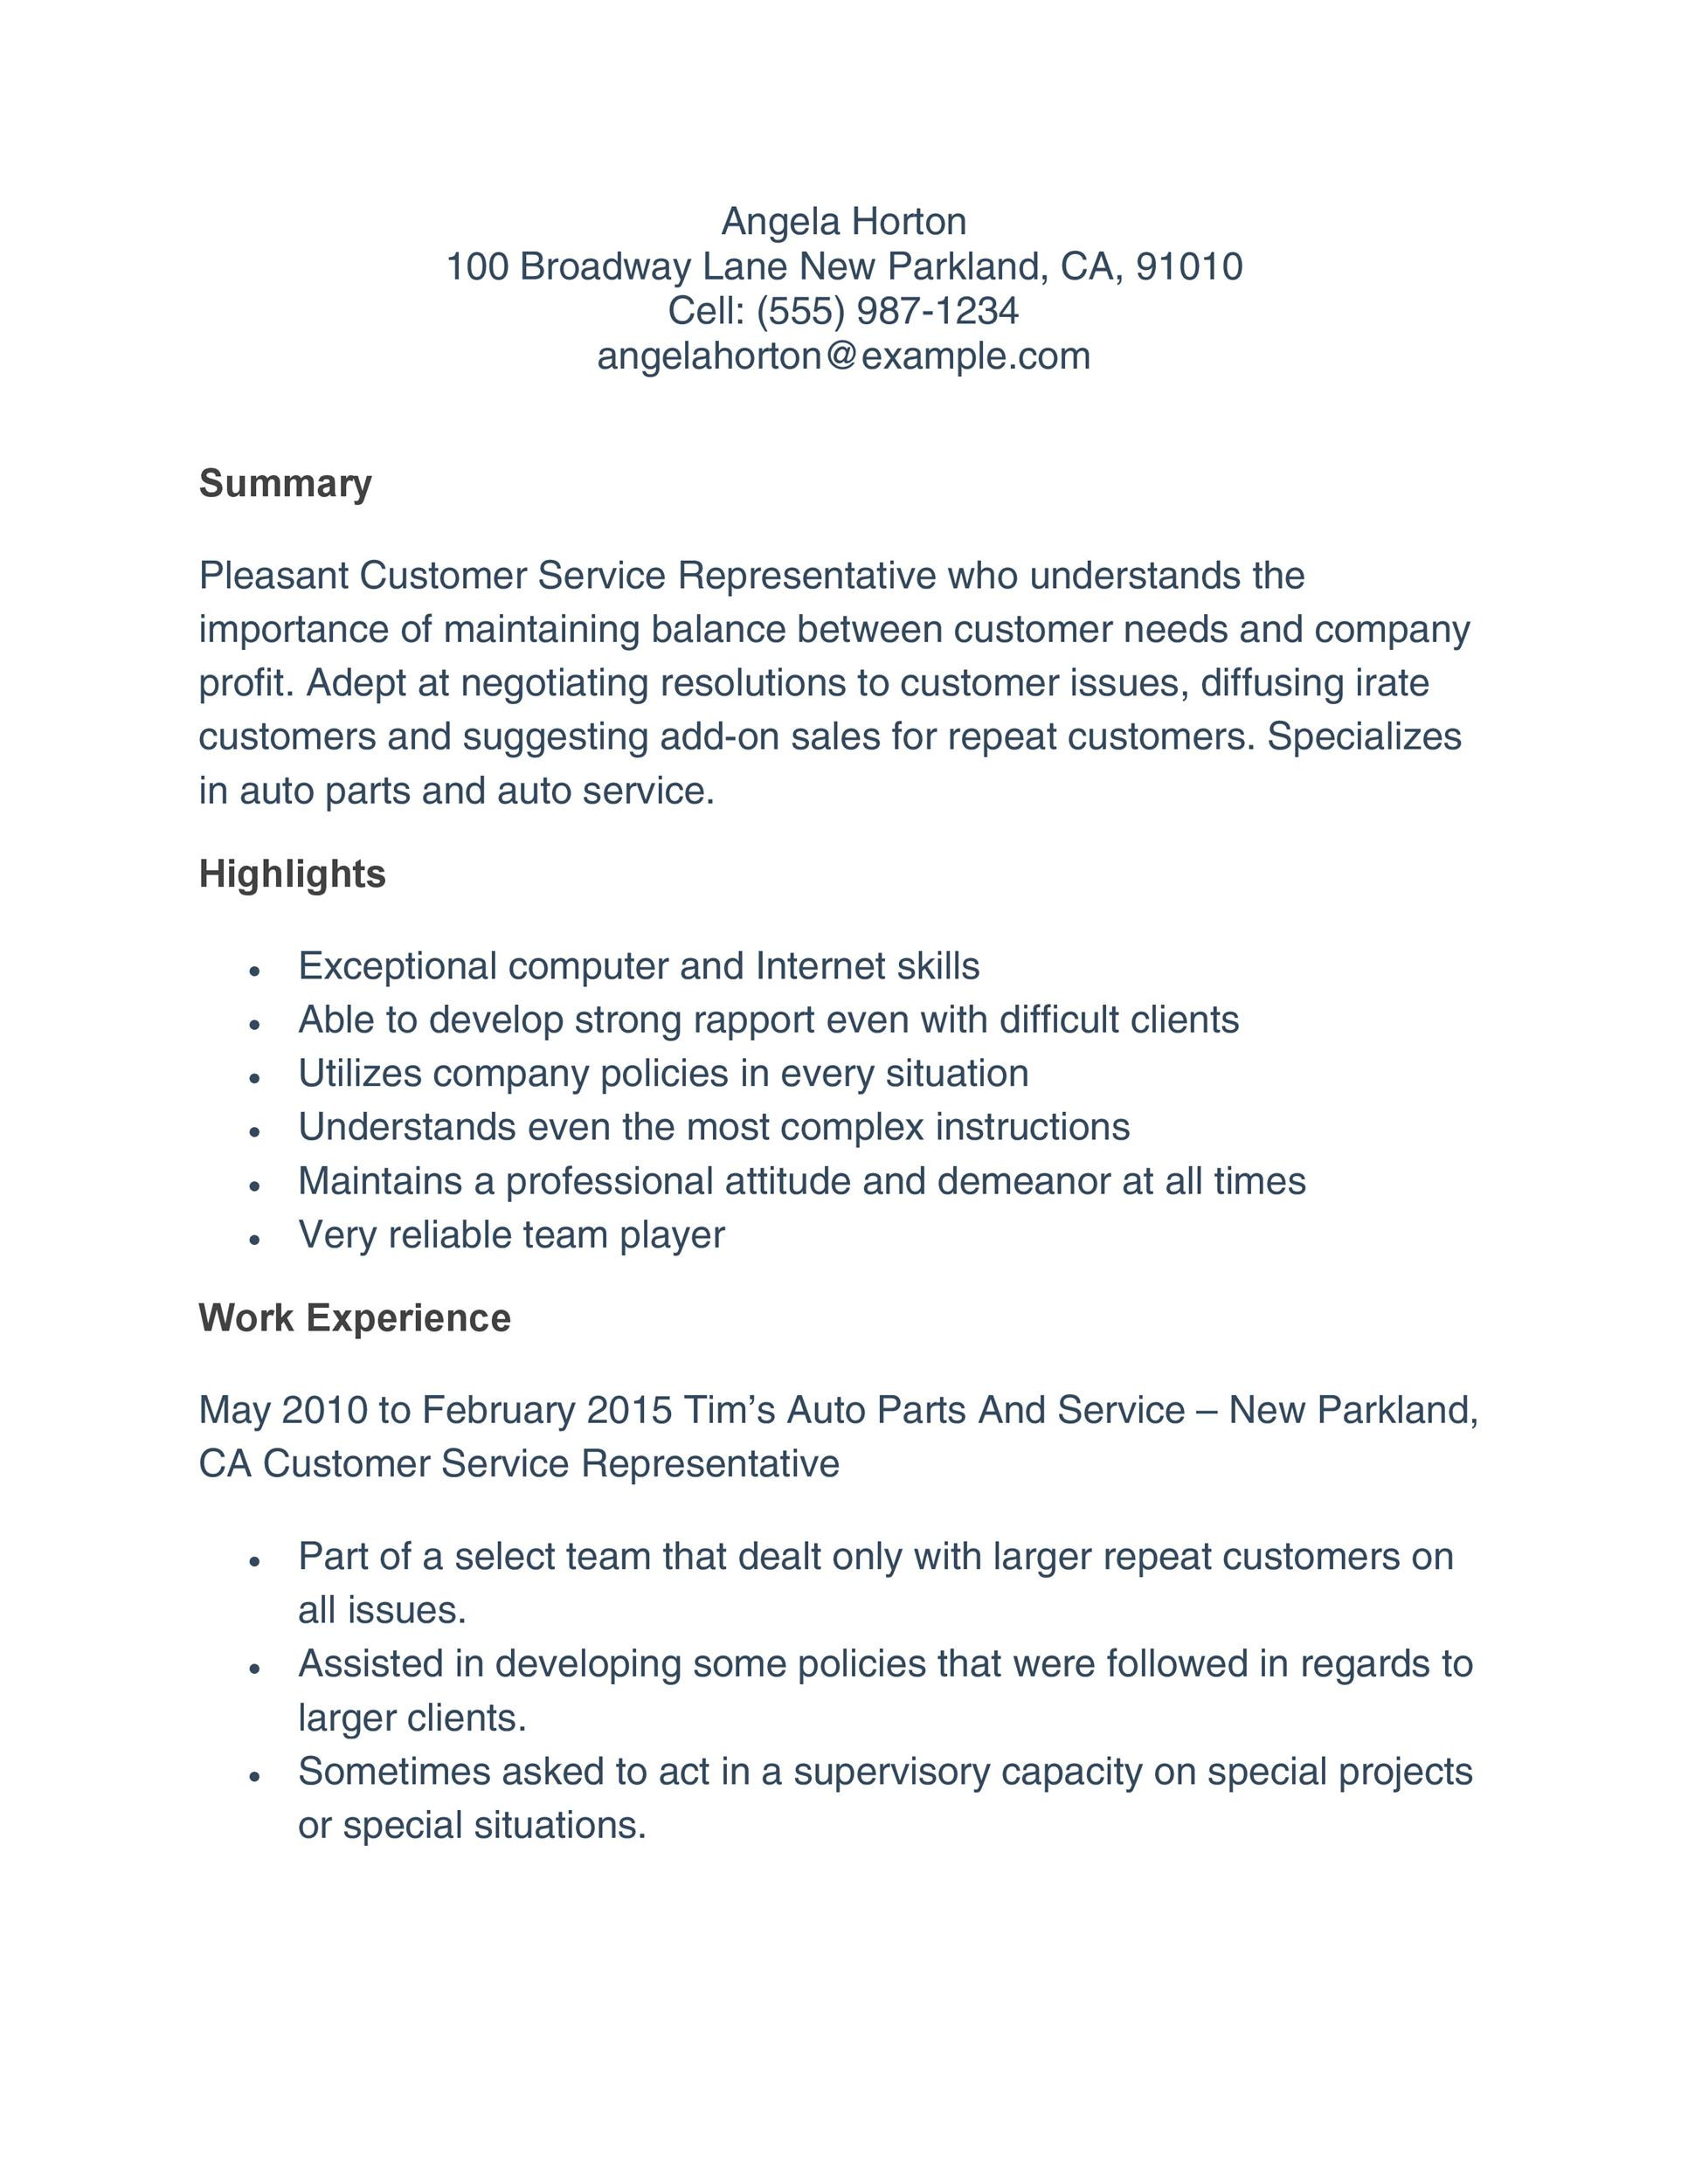 Resume Sample for Tim Hortons Job 30lancarrezekiq Customer Service Resume Examples á Templatelab